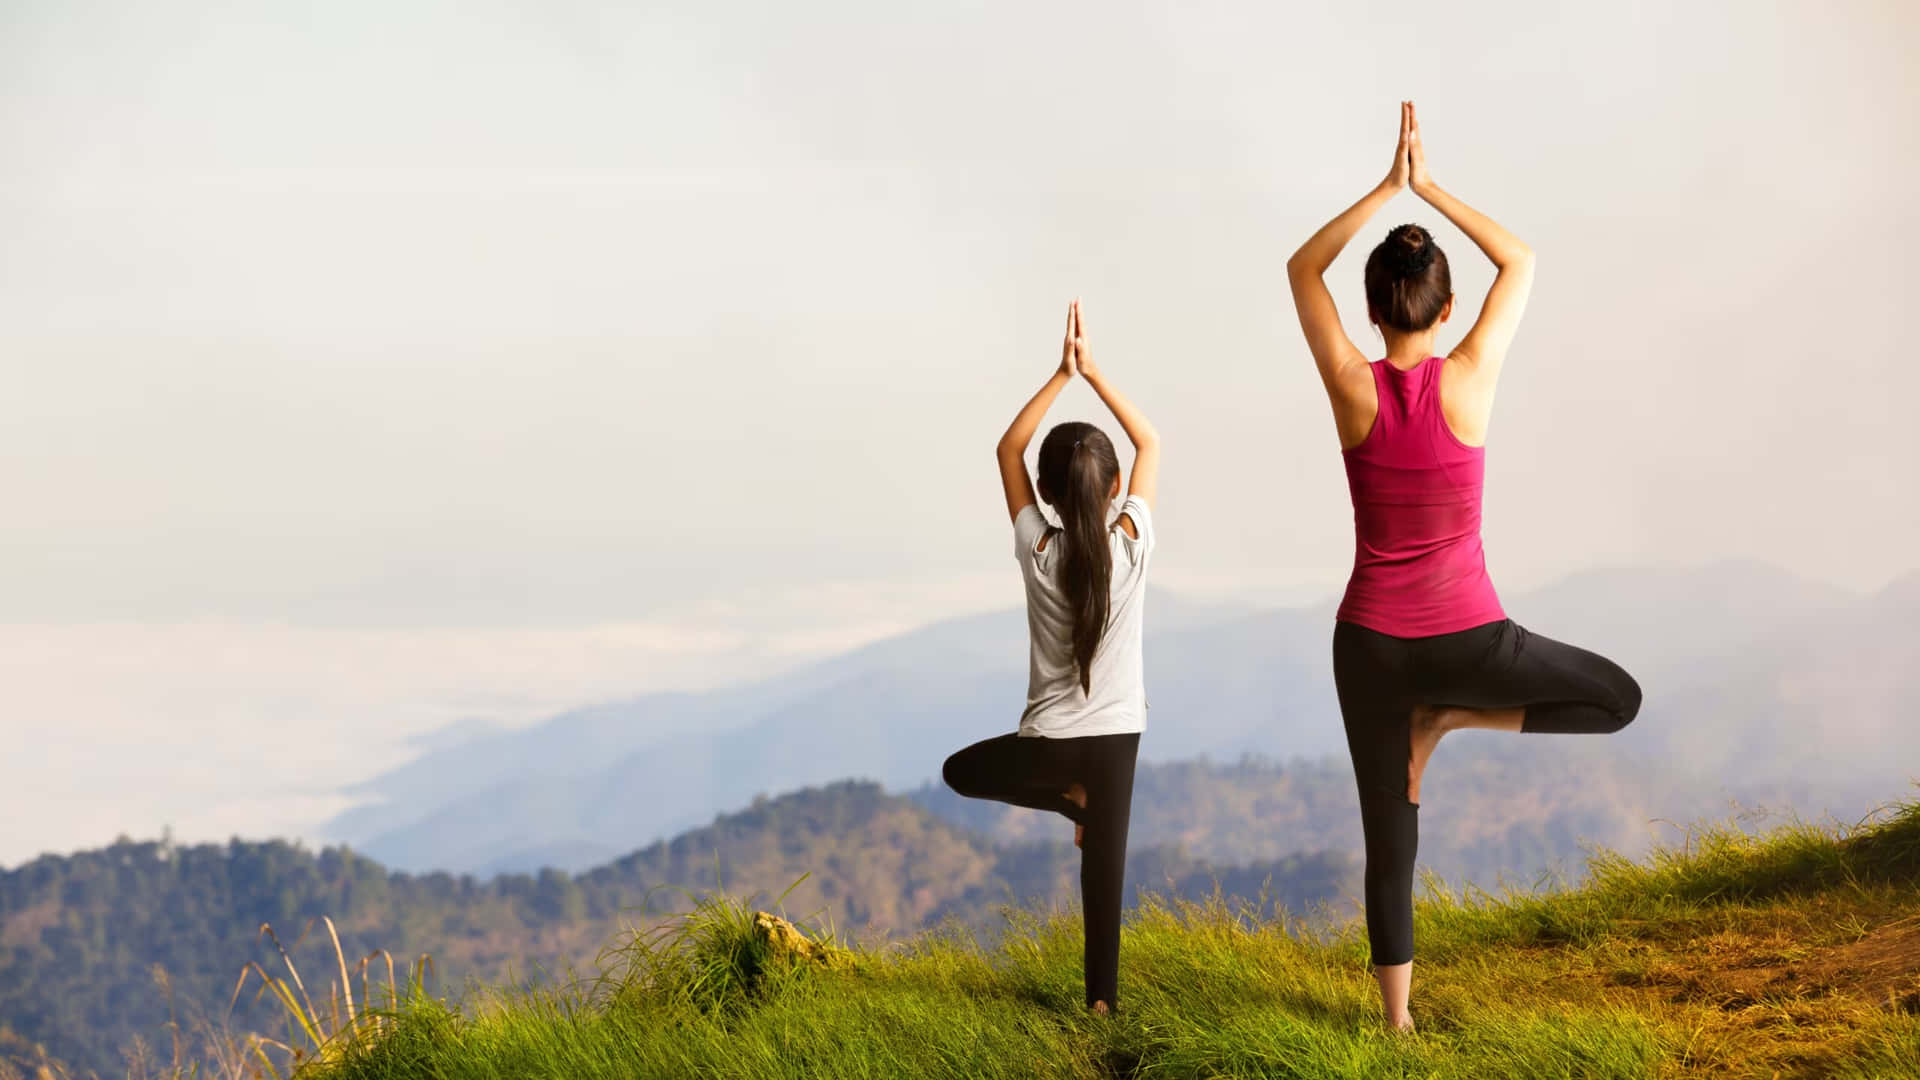 Finding inner peace through yoga